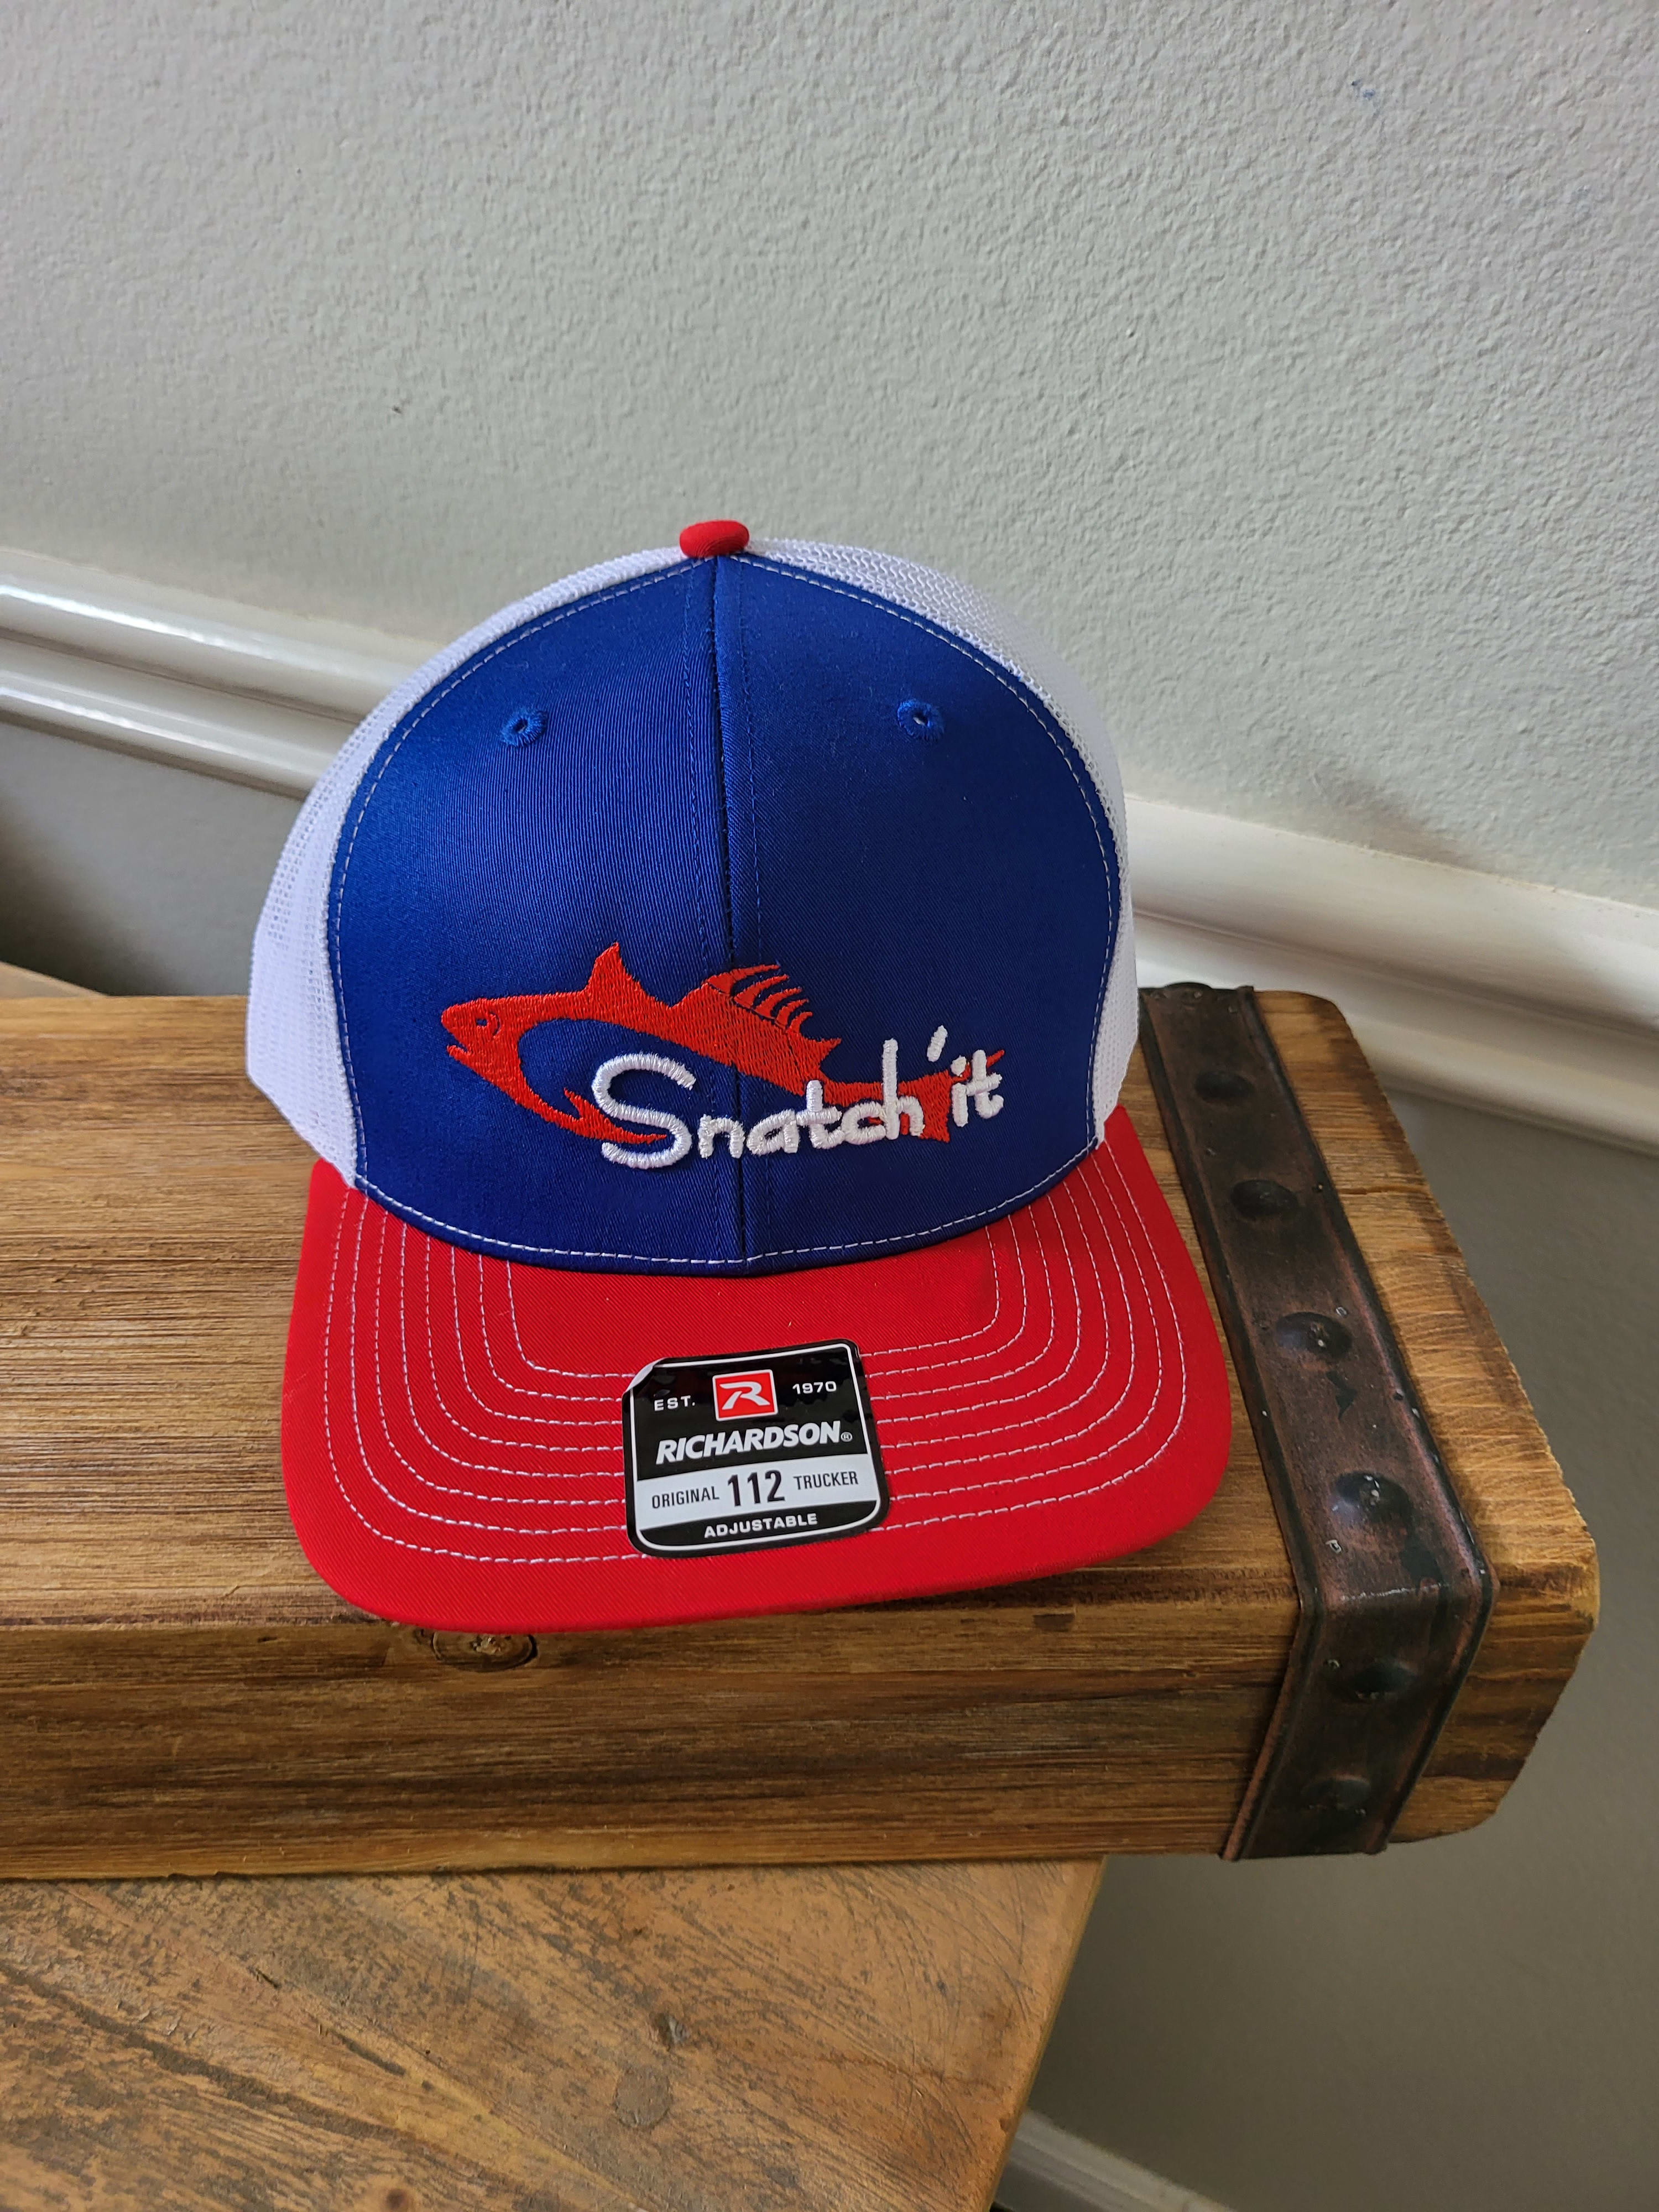 & | - Red, Fishing White Cap Snatch\'it Fishing | Sebring Hats Gear Blue Premium Apparel -